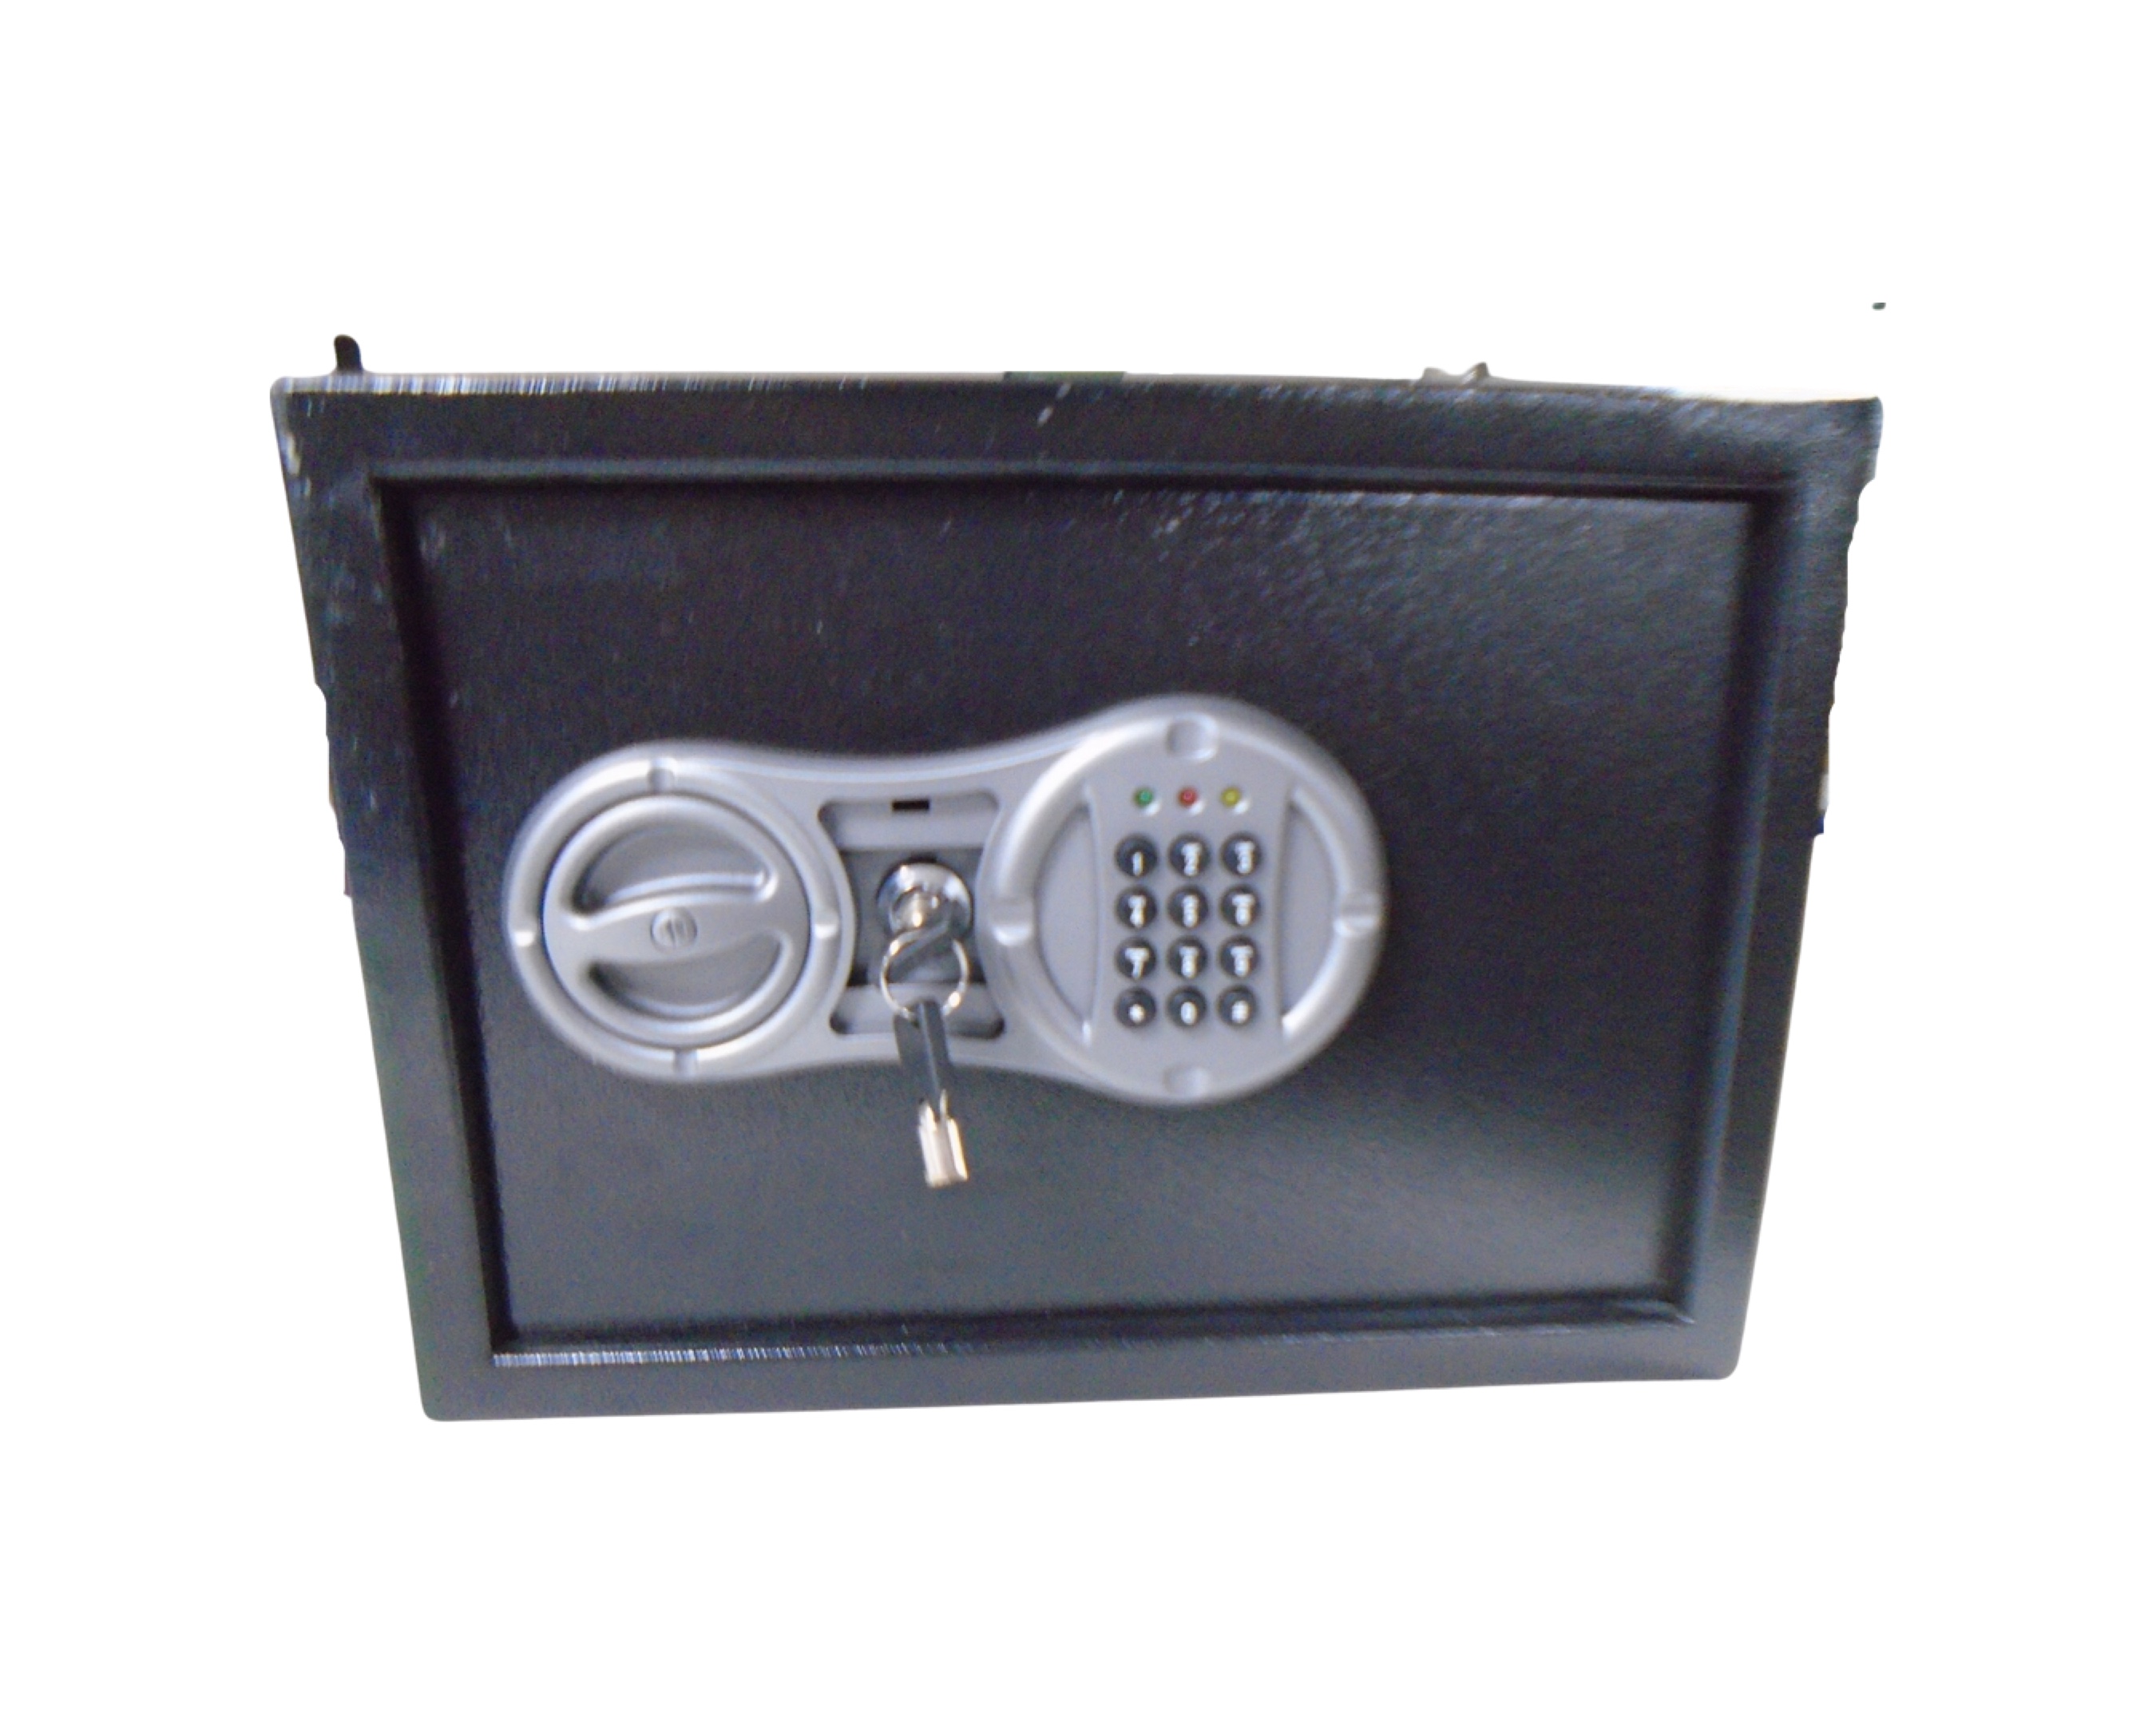 A digital safe with key.